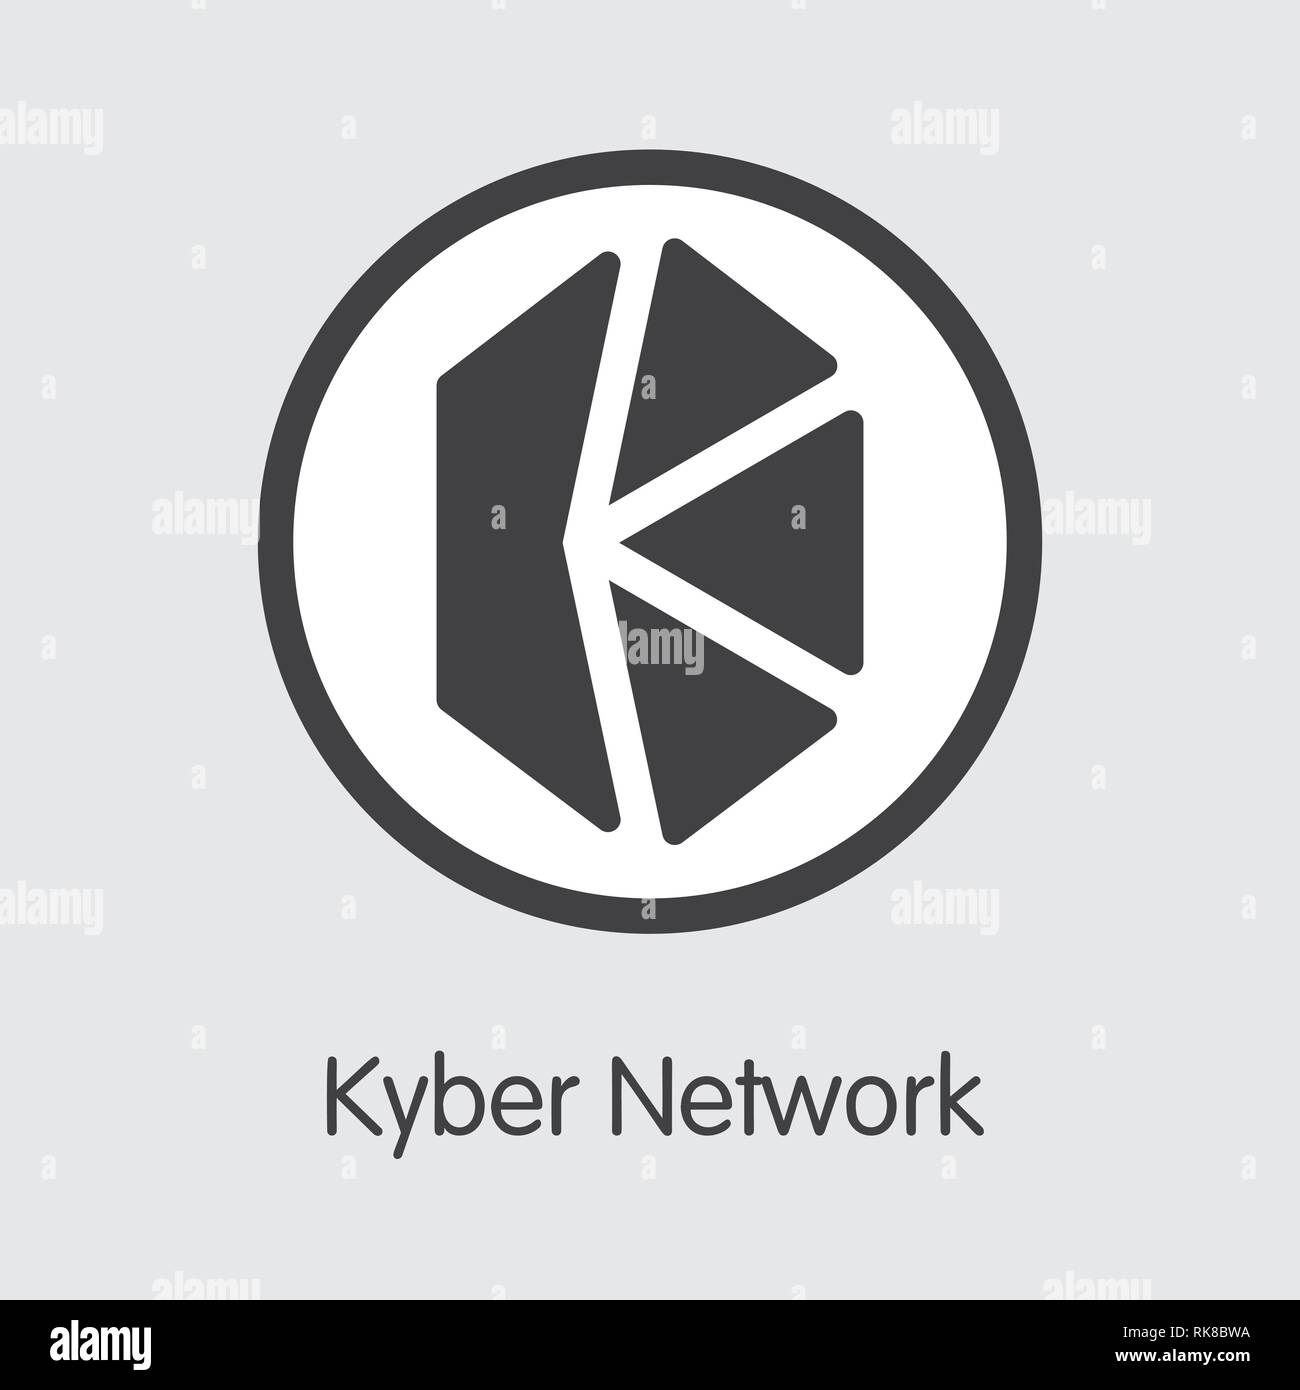 KNC - Kyber Network. The Logo of Money or Market Emblem Stock Vector ...